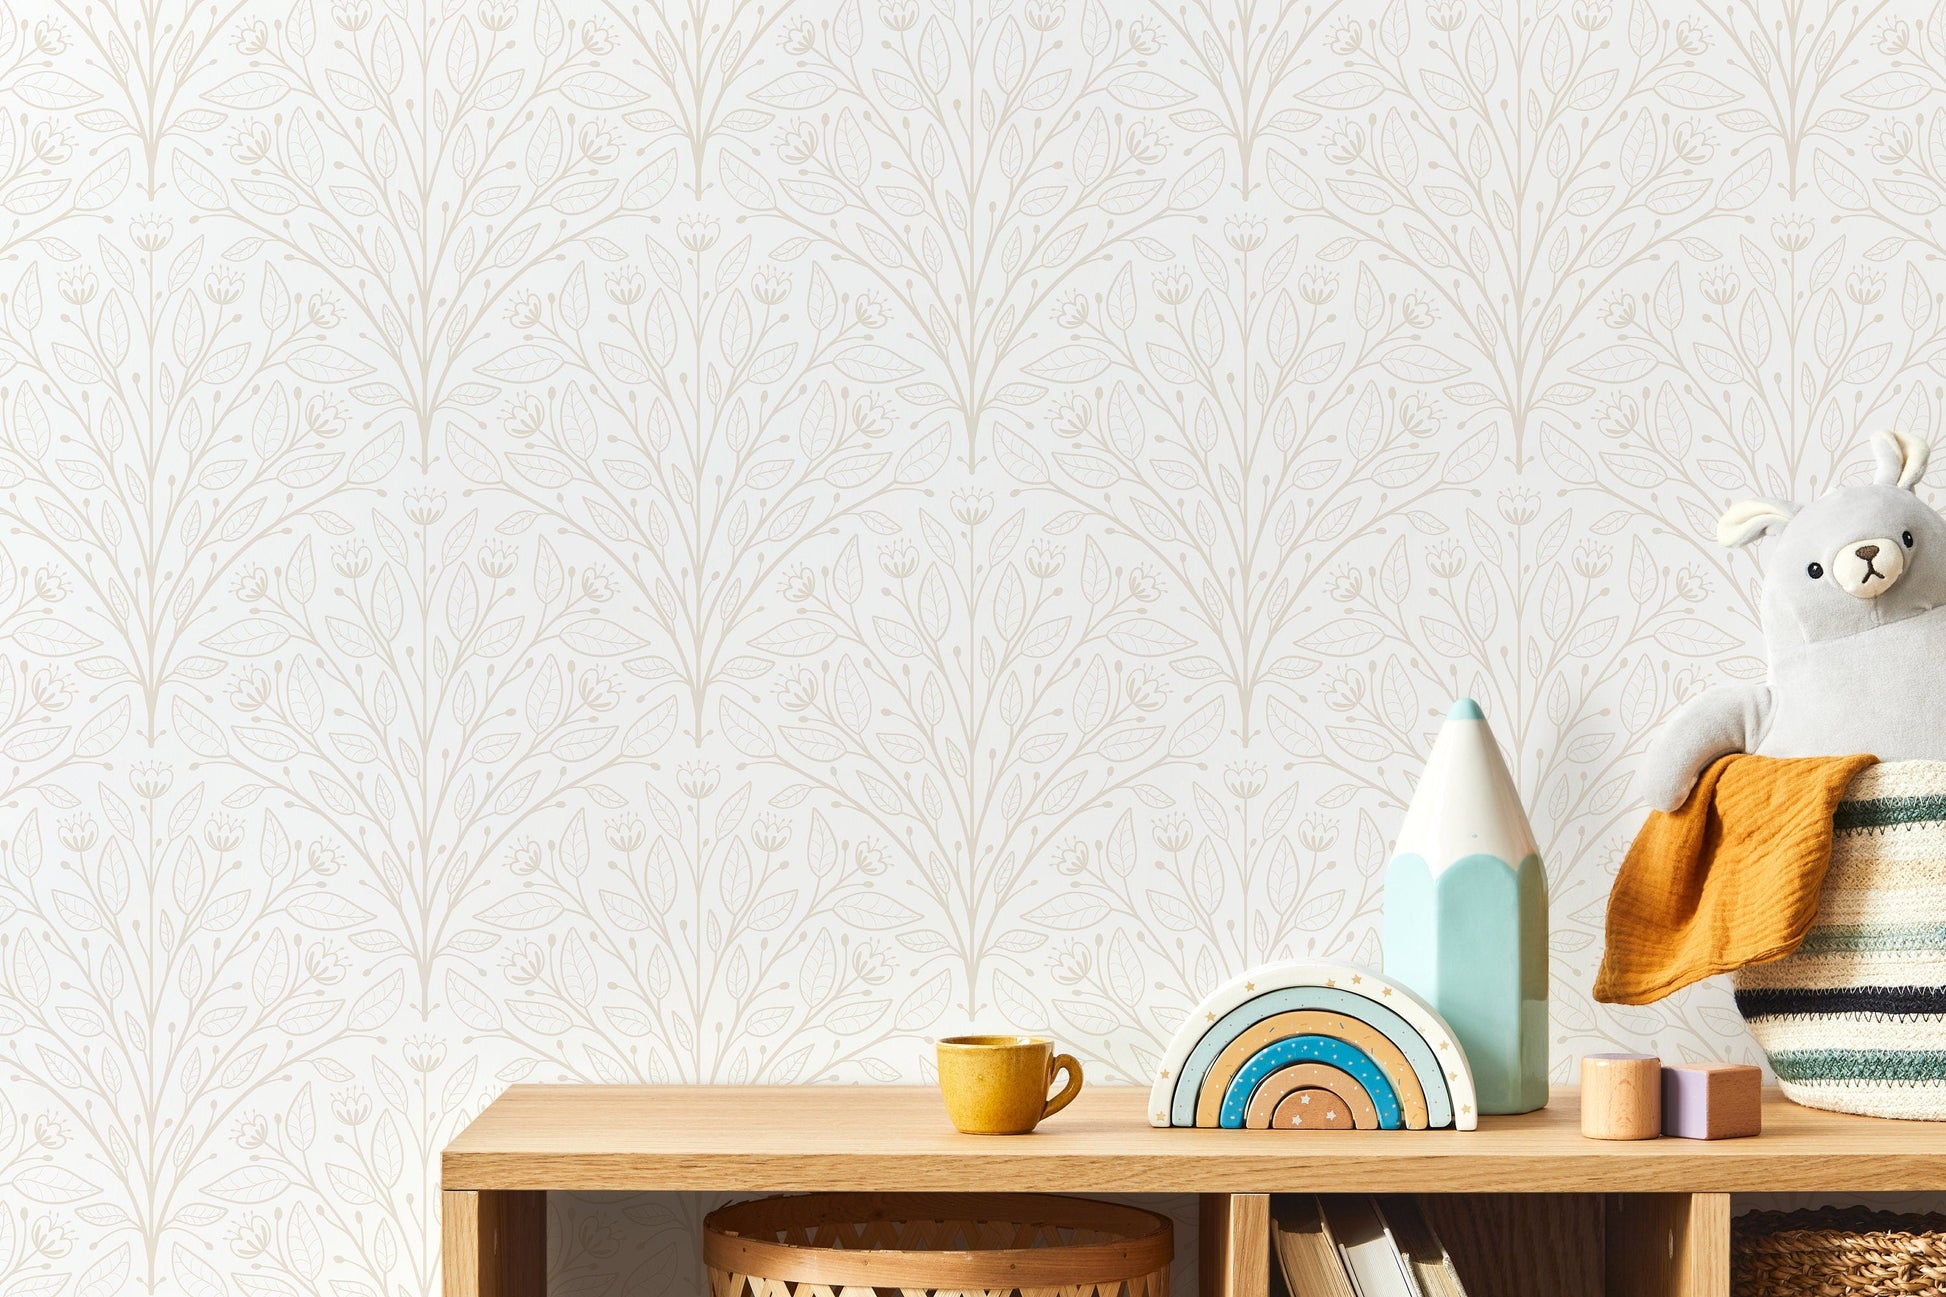 Neutral Boho Floral Wallpaper / Peel and Stick Wallpaper Removable Wallpaper Home Decor Wall Art Wall Decor Room Decor - D042